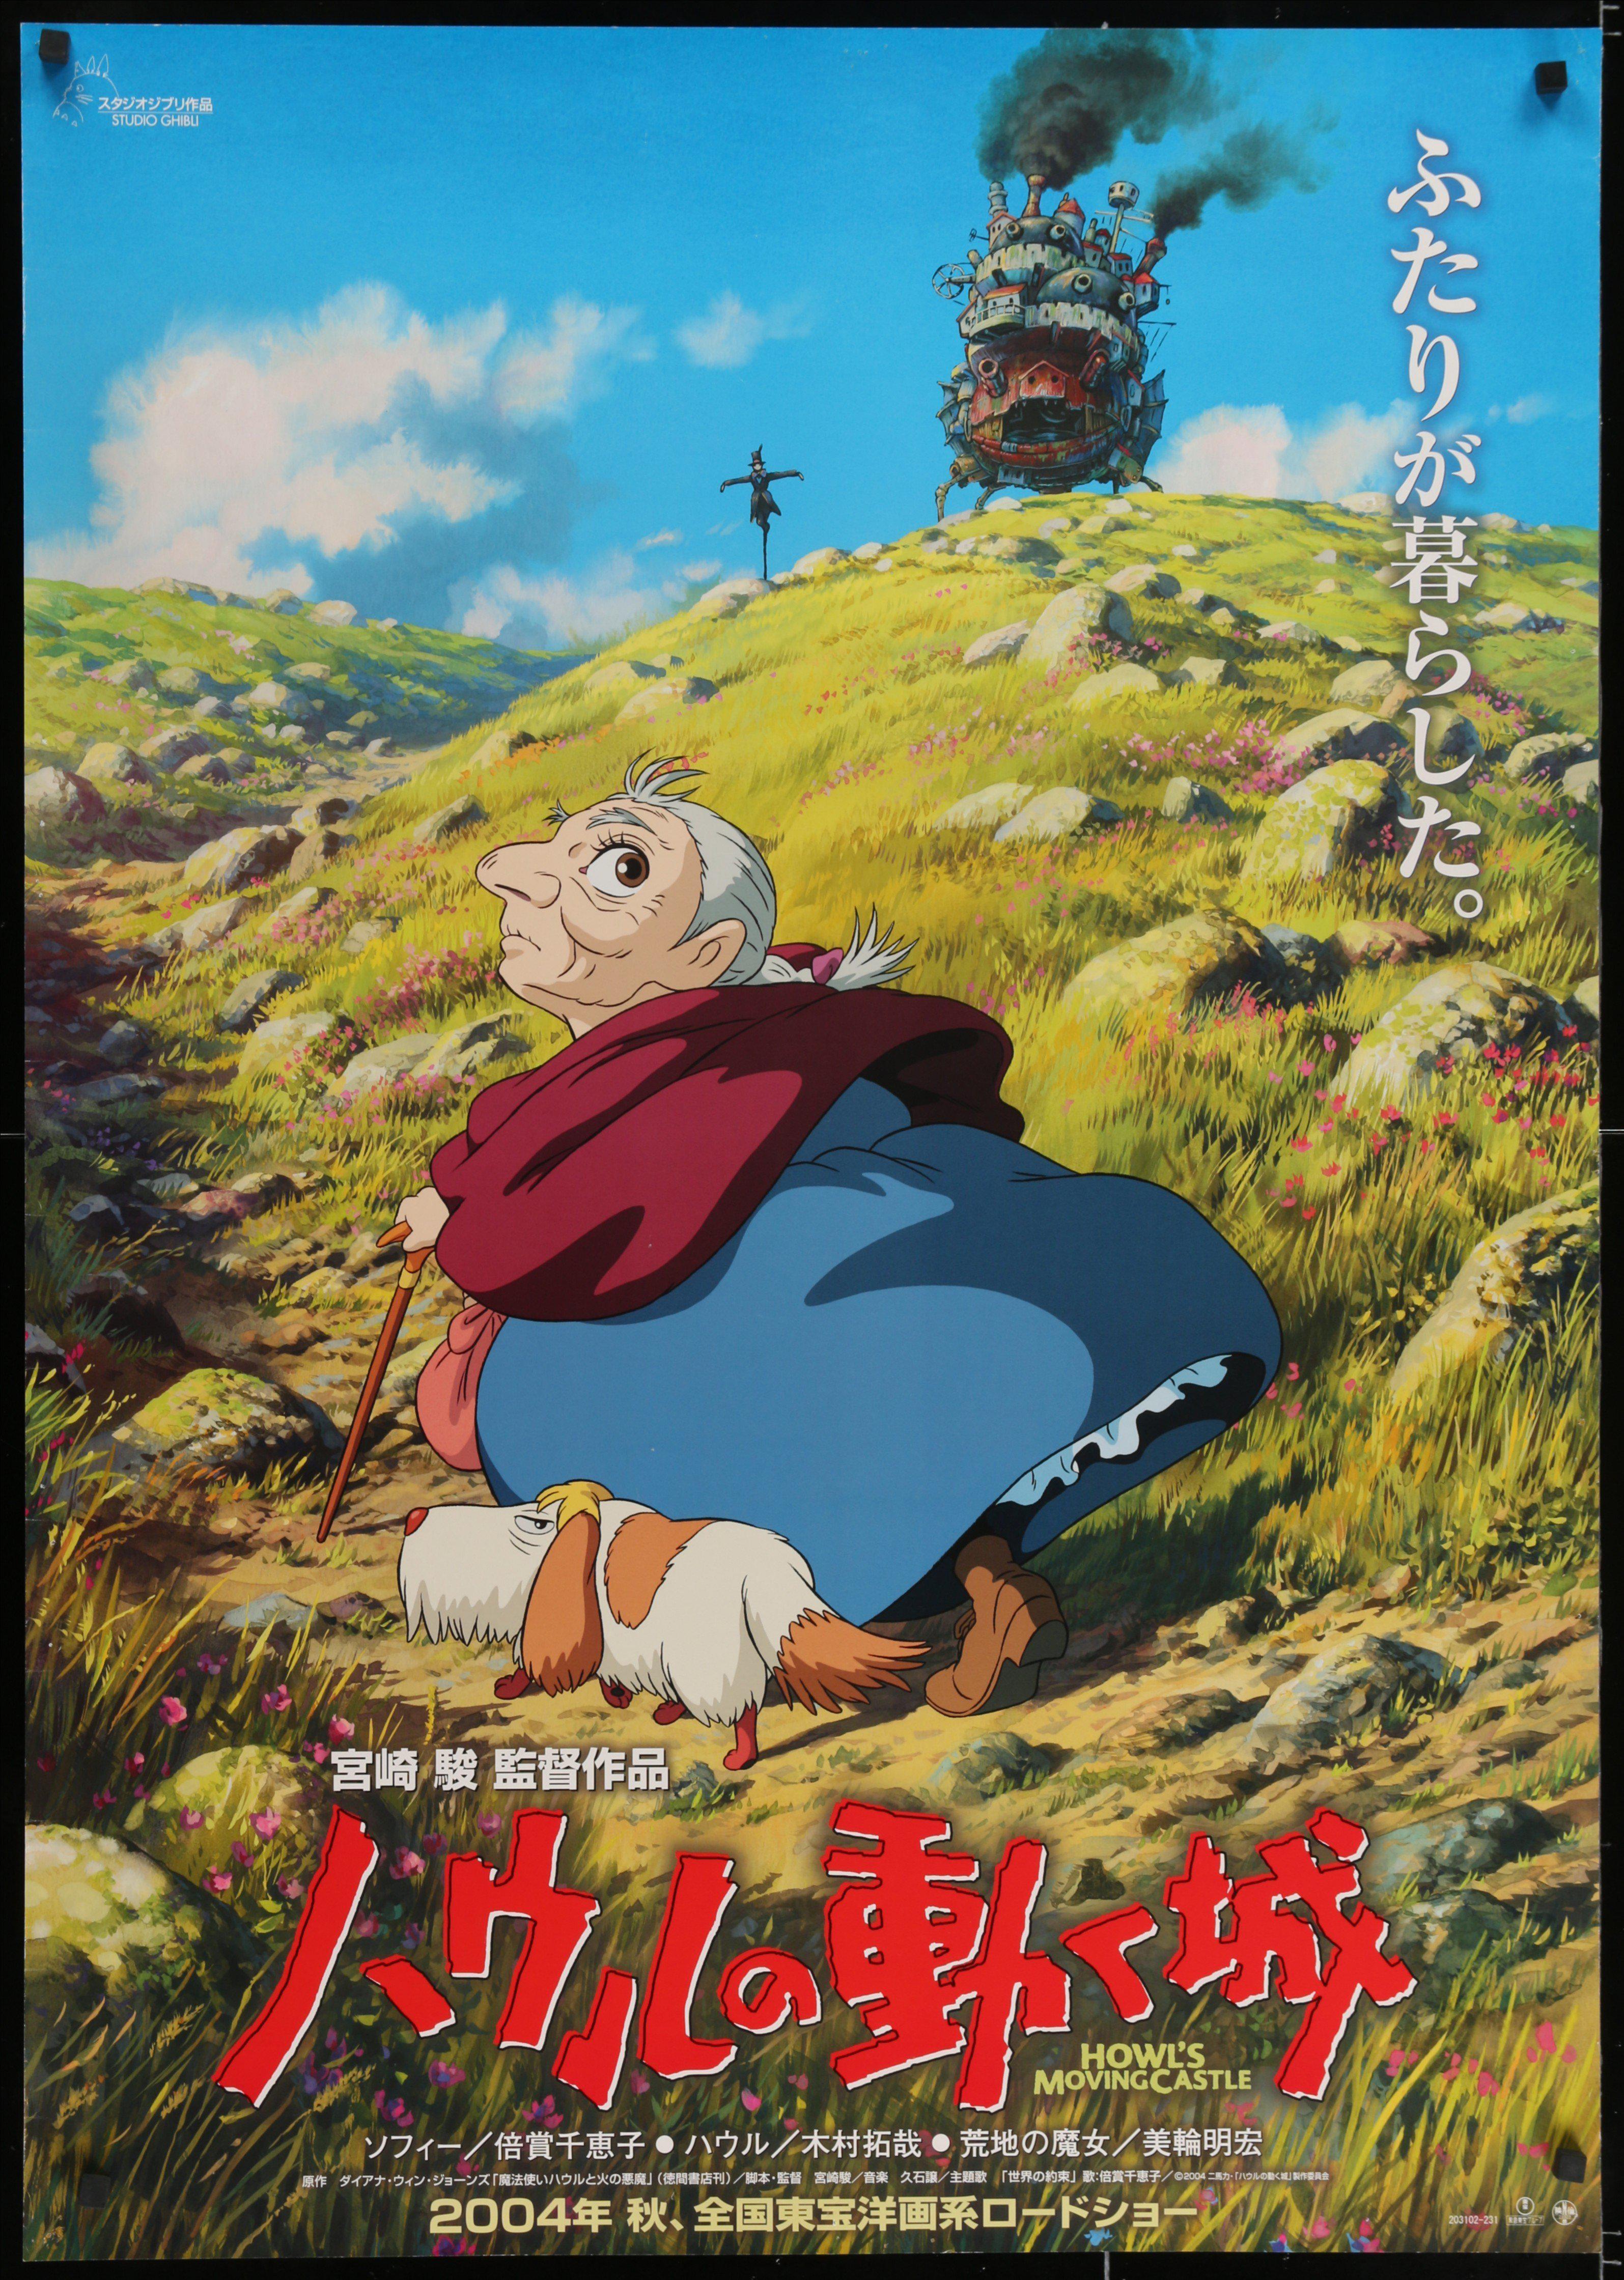 Miyazaki's Howl's Moving Castle Original Japanese Movie Poster